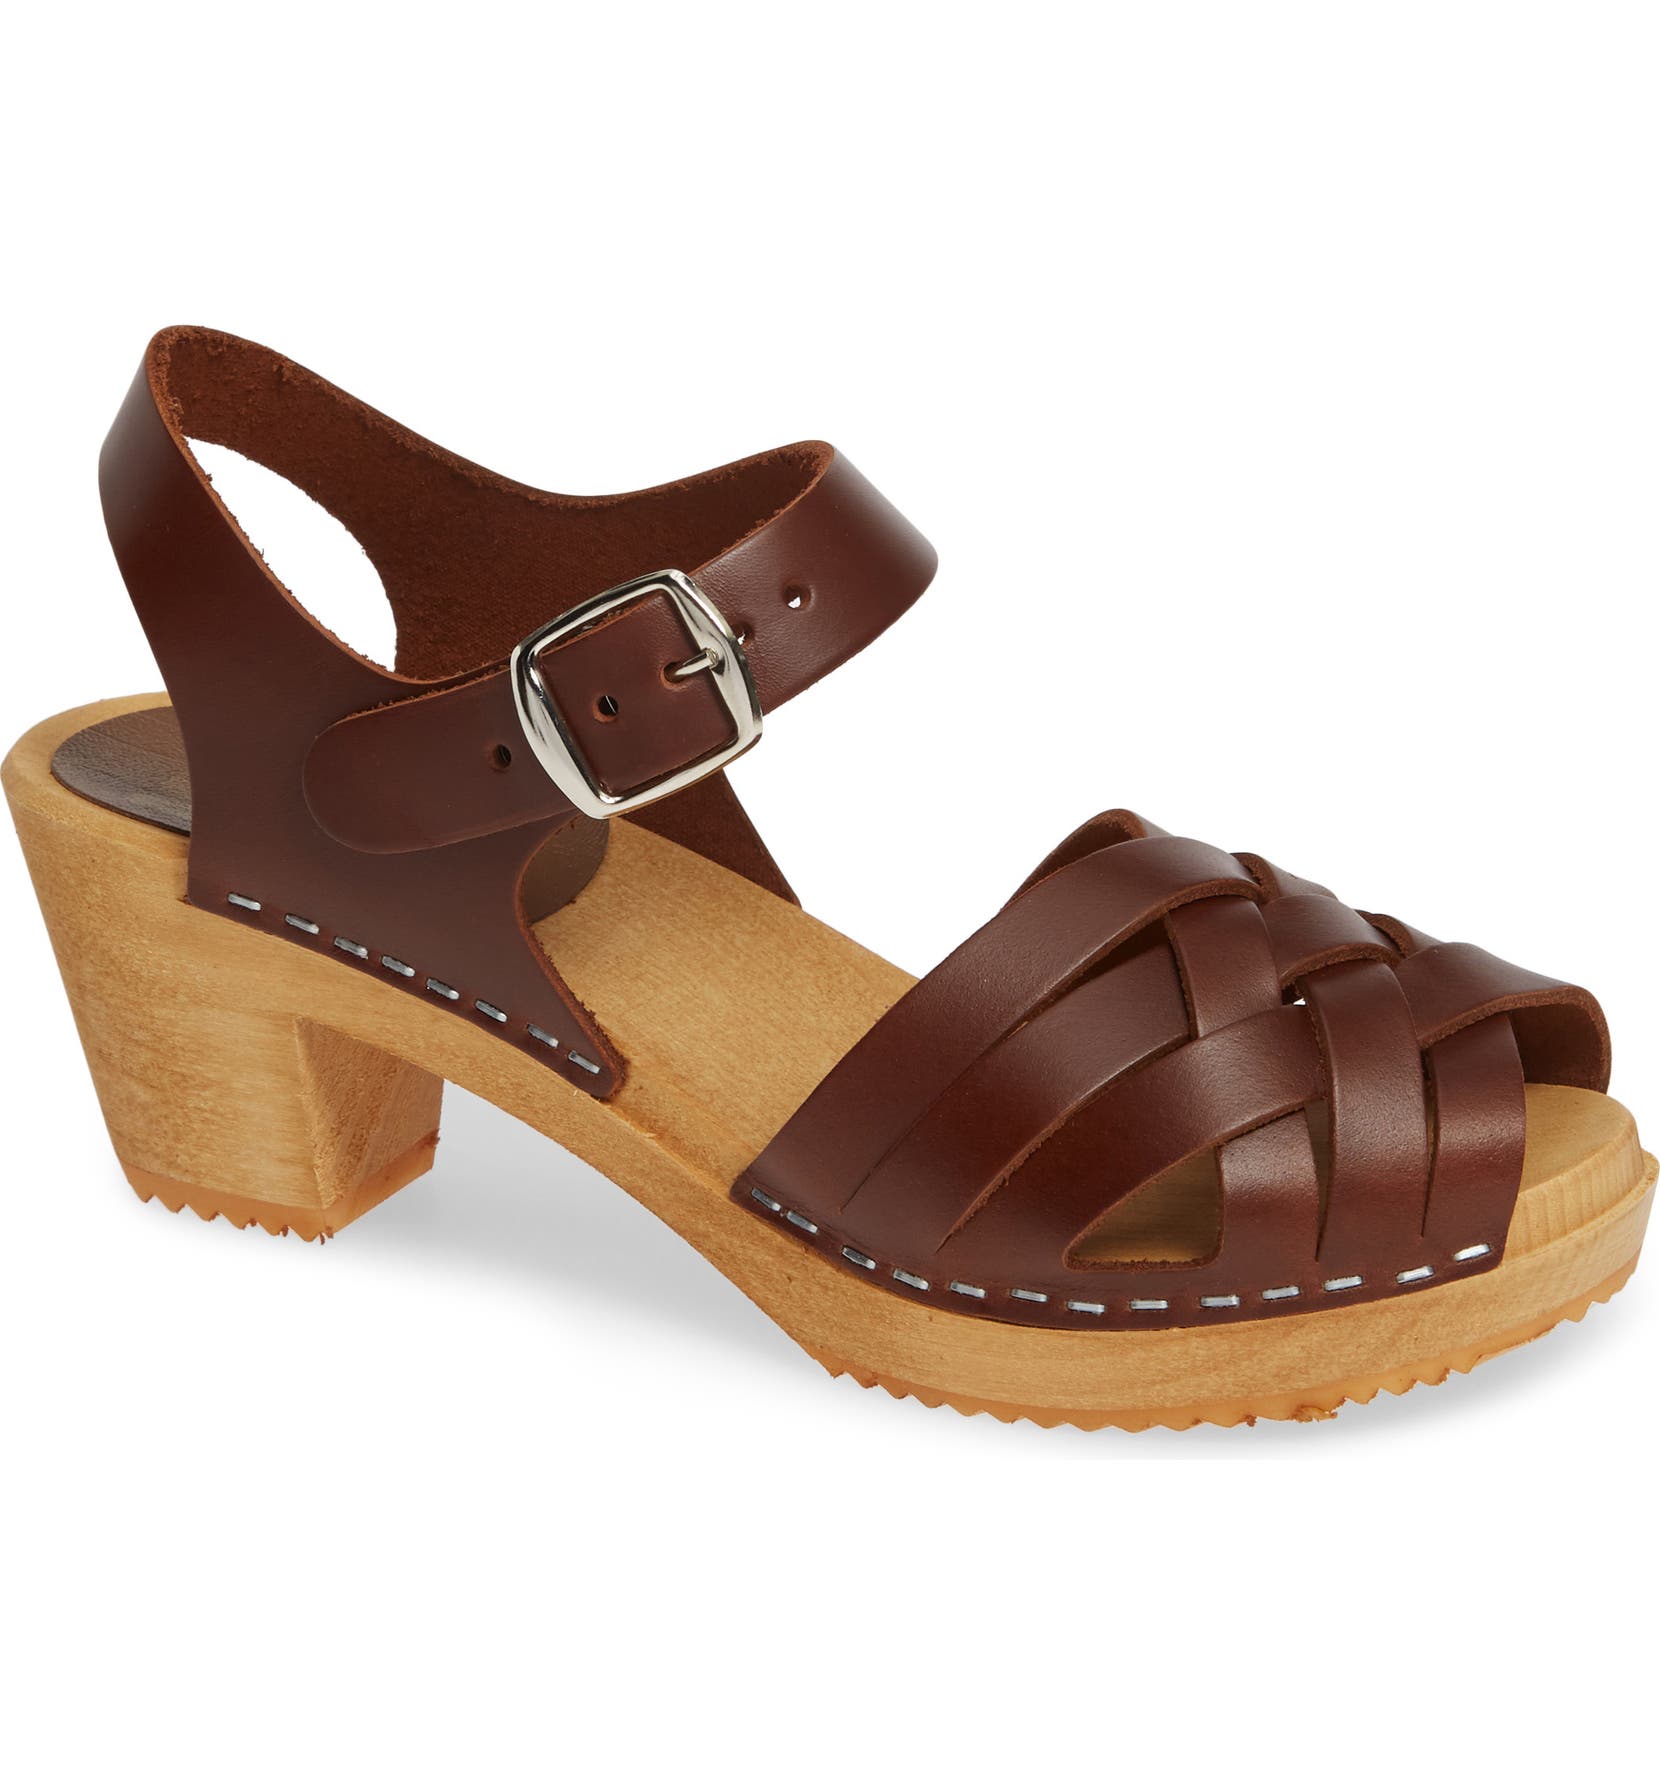 Bety Clog Sandal | Womens sandals, Clogs, Sandals